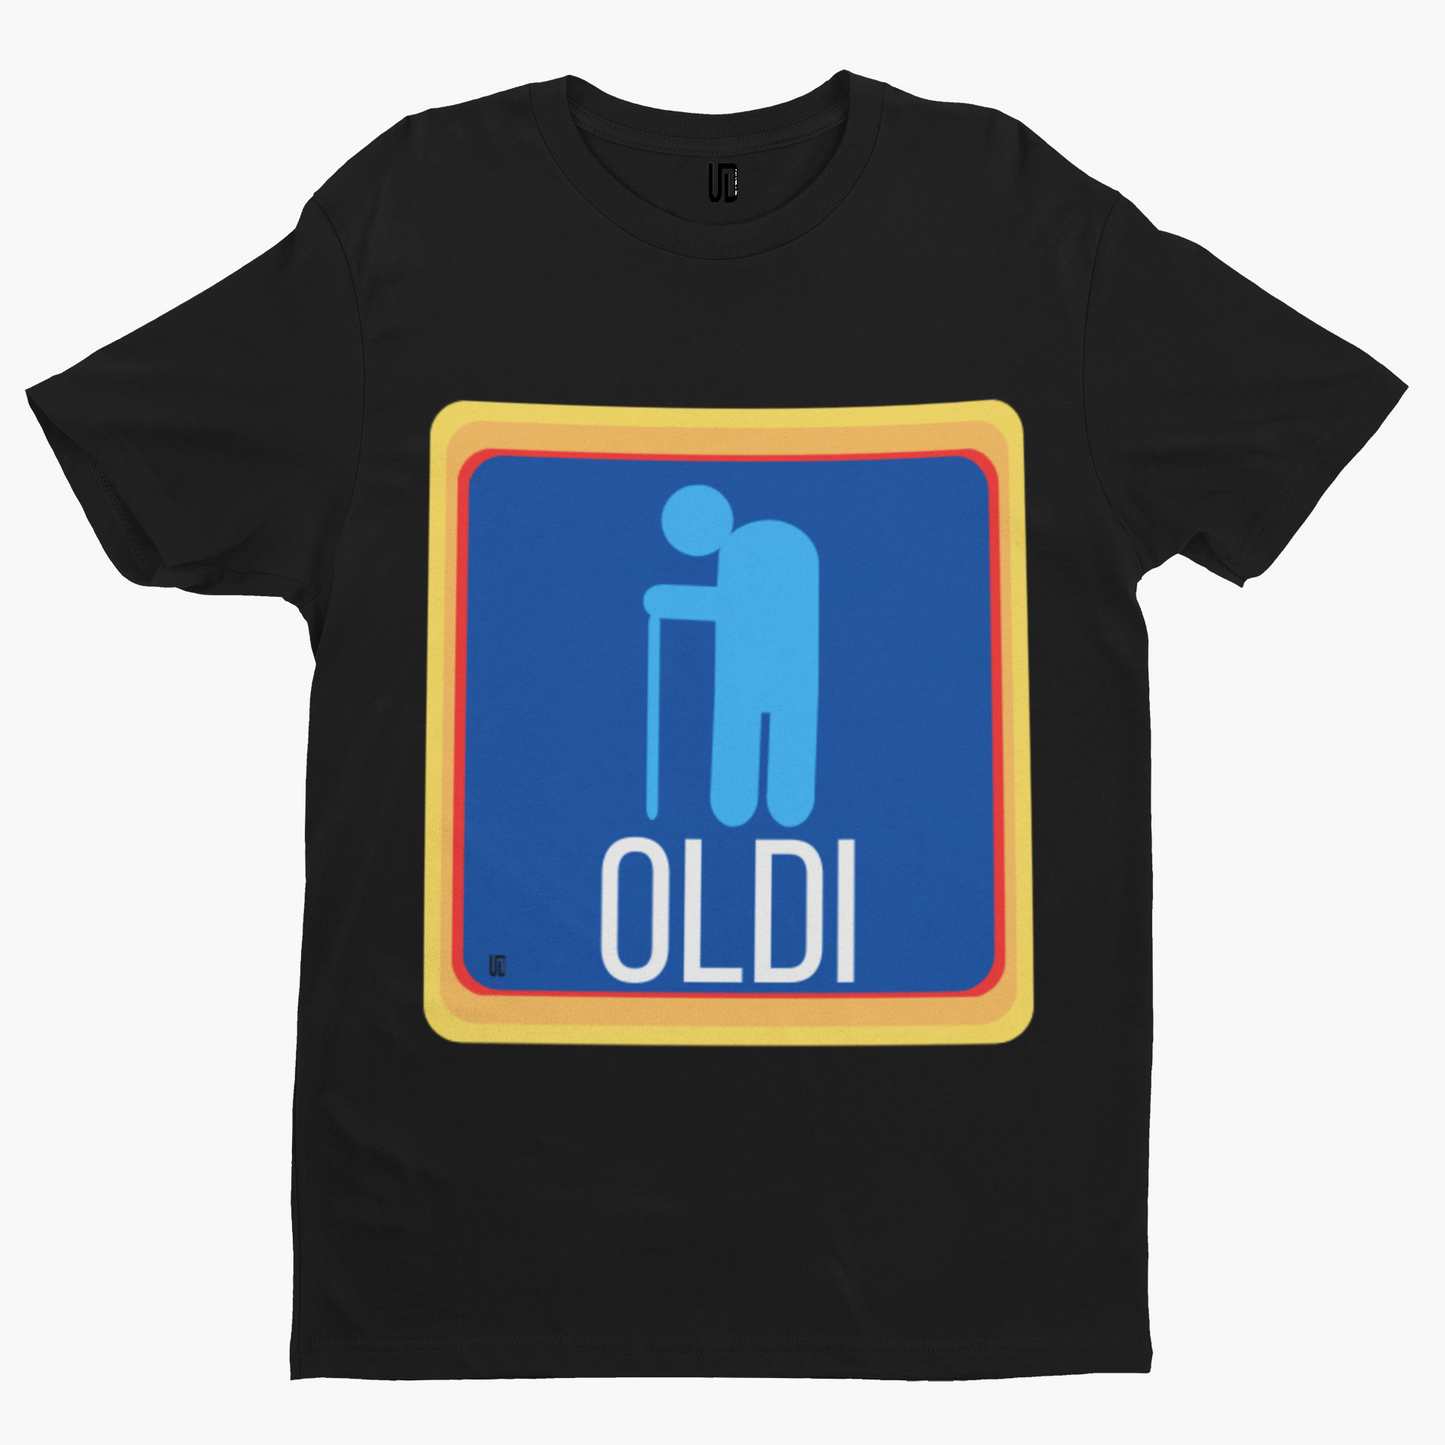 Oldi T-Shirt - Aldi Comedy Funny Cool Adult Dad